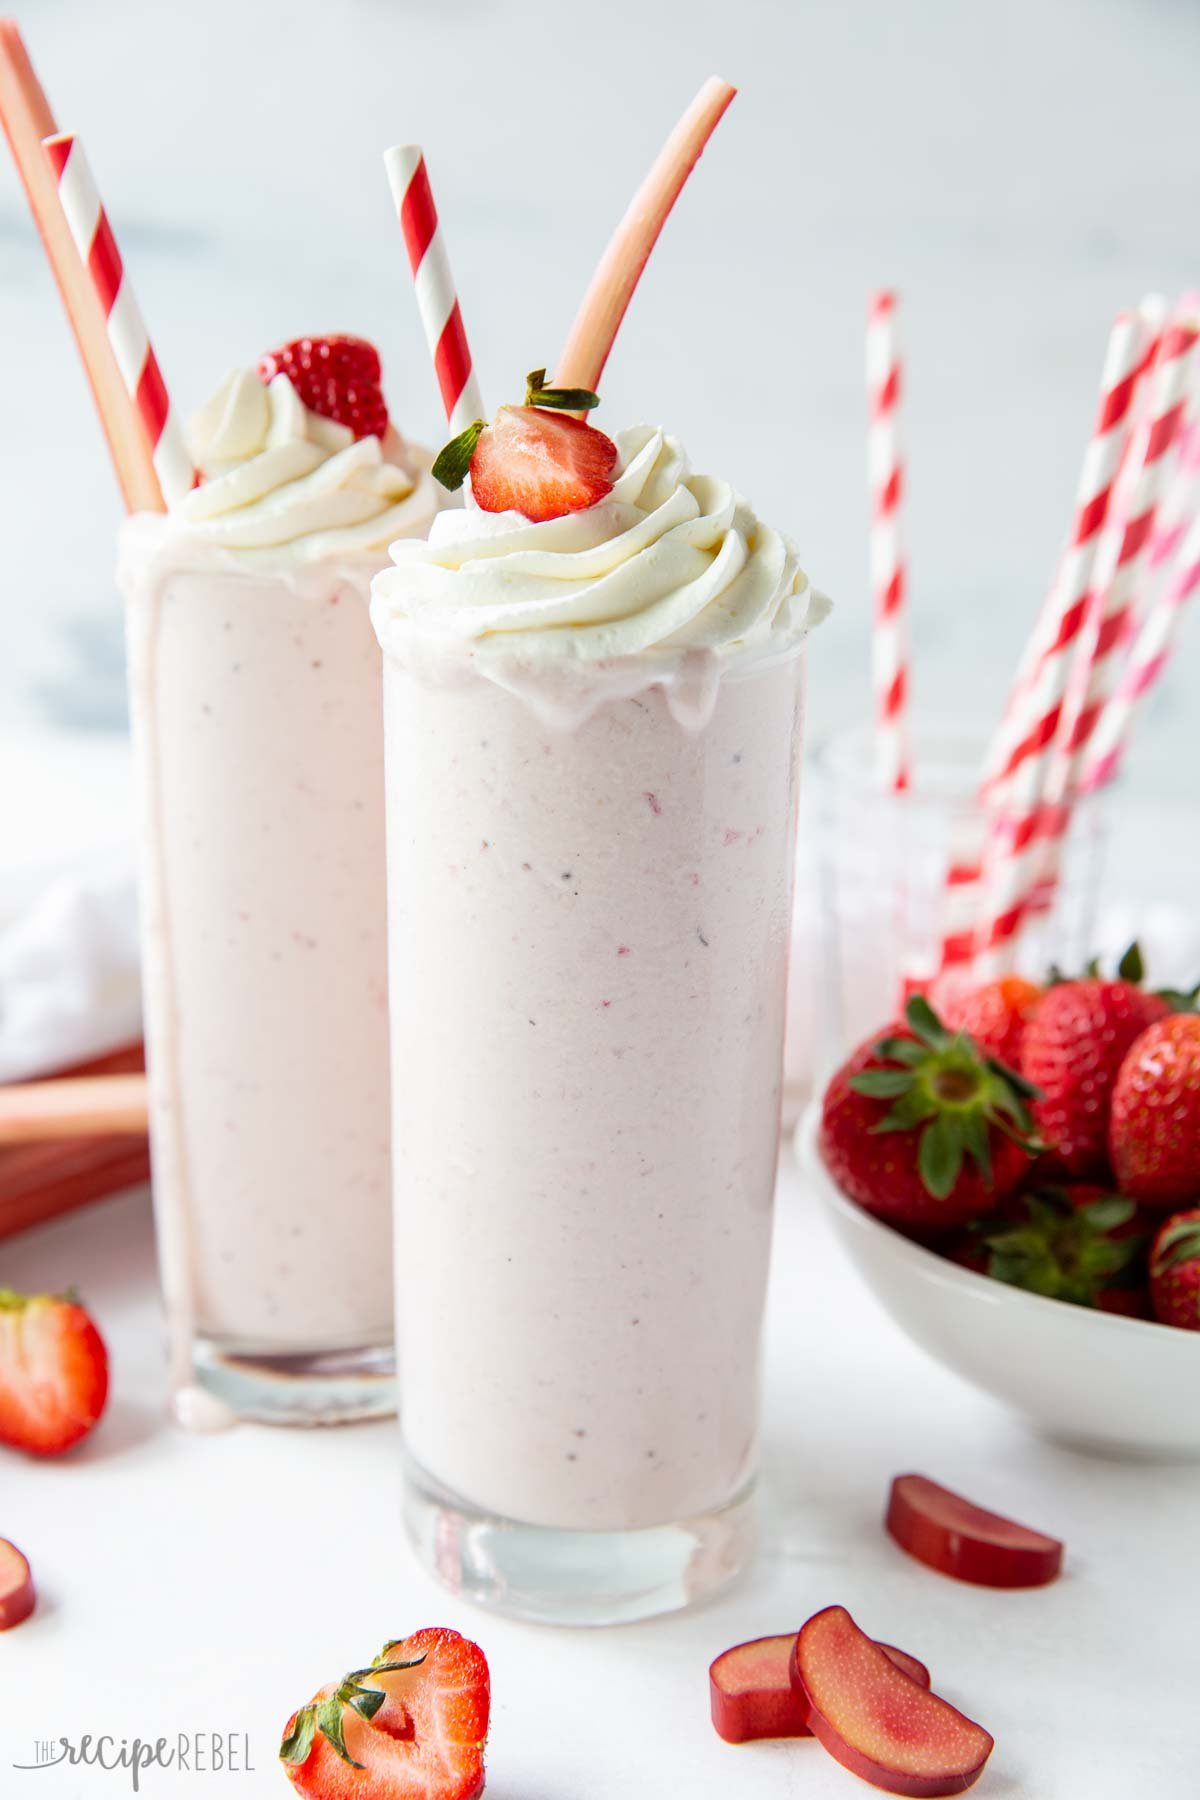 Roasted Strawberry Rhubarb Milkshakes - The Recipe Rebel